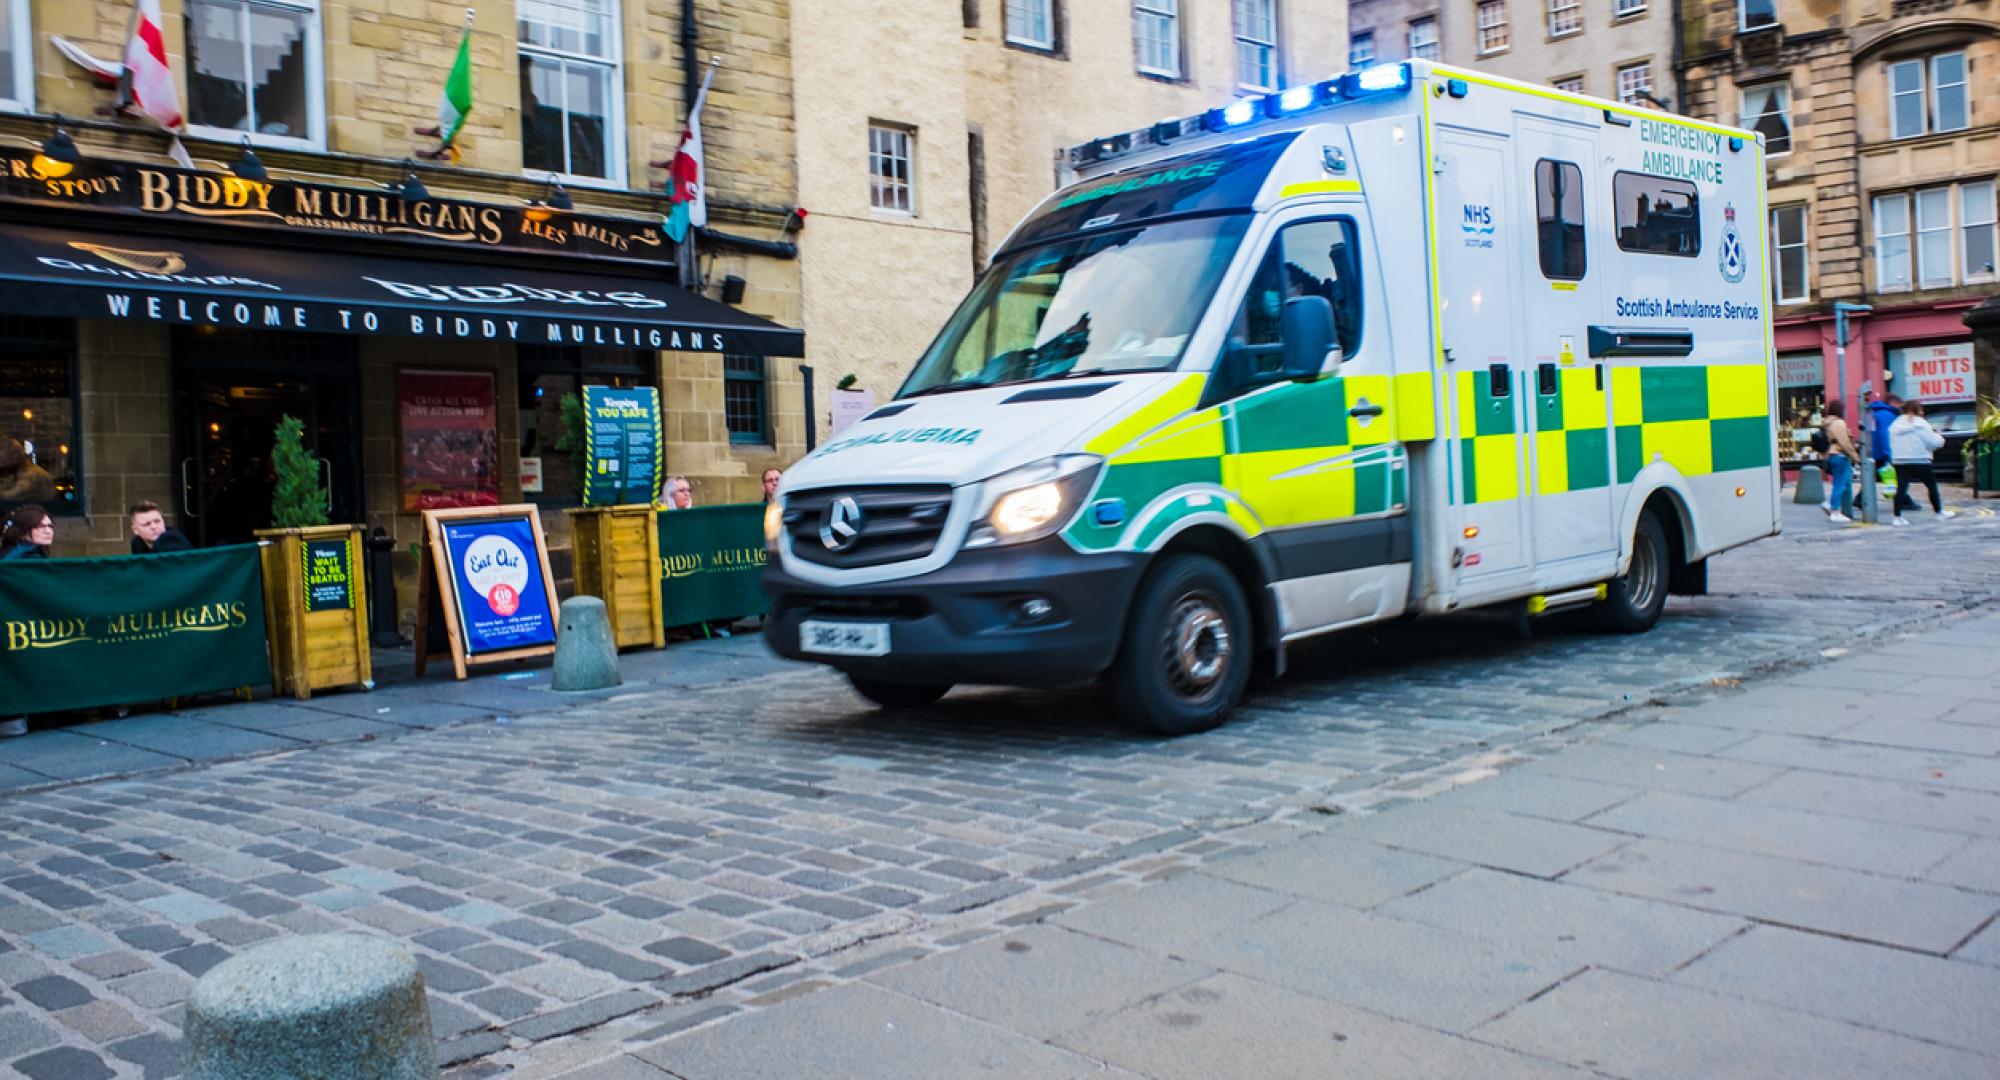 Emergency Ambulance driving through Grassmarket in Edinburgh